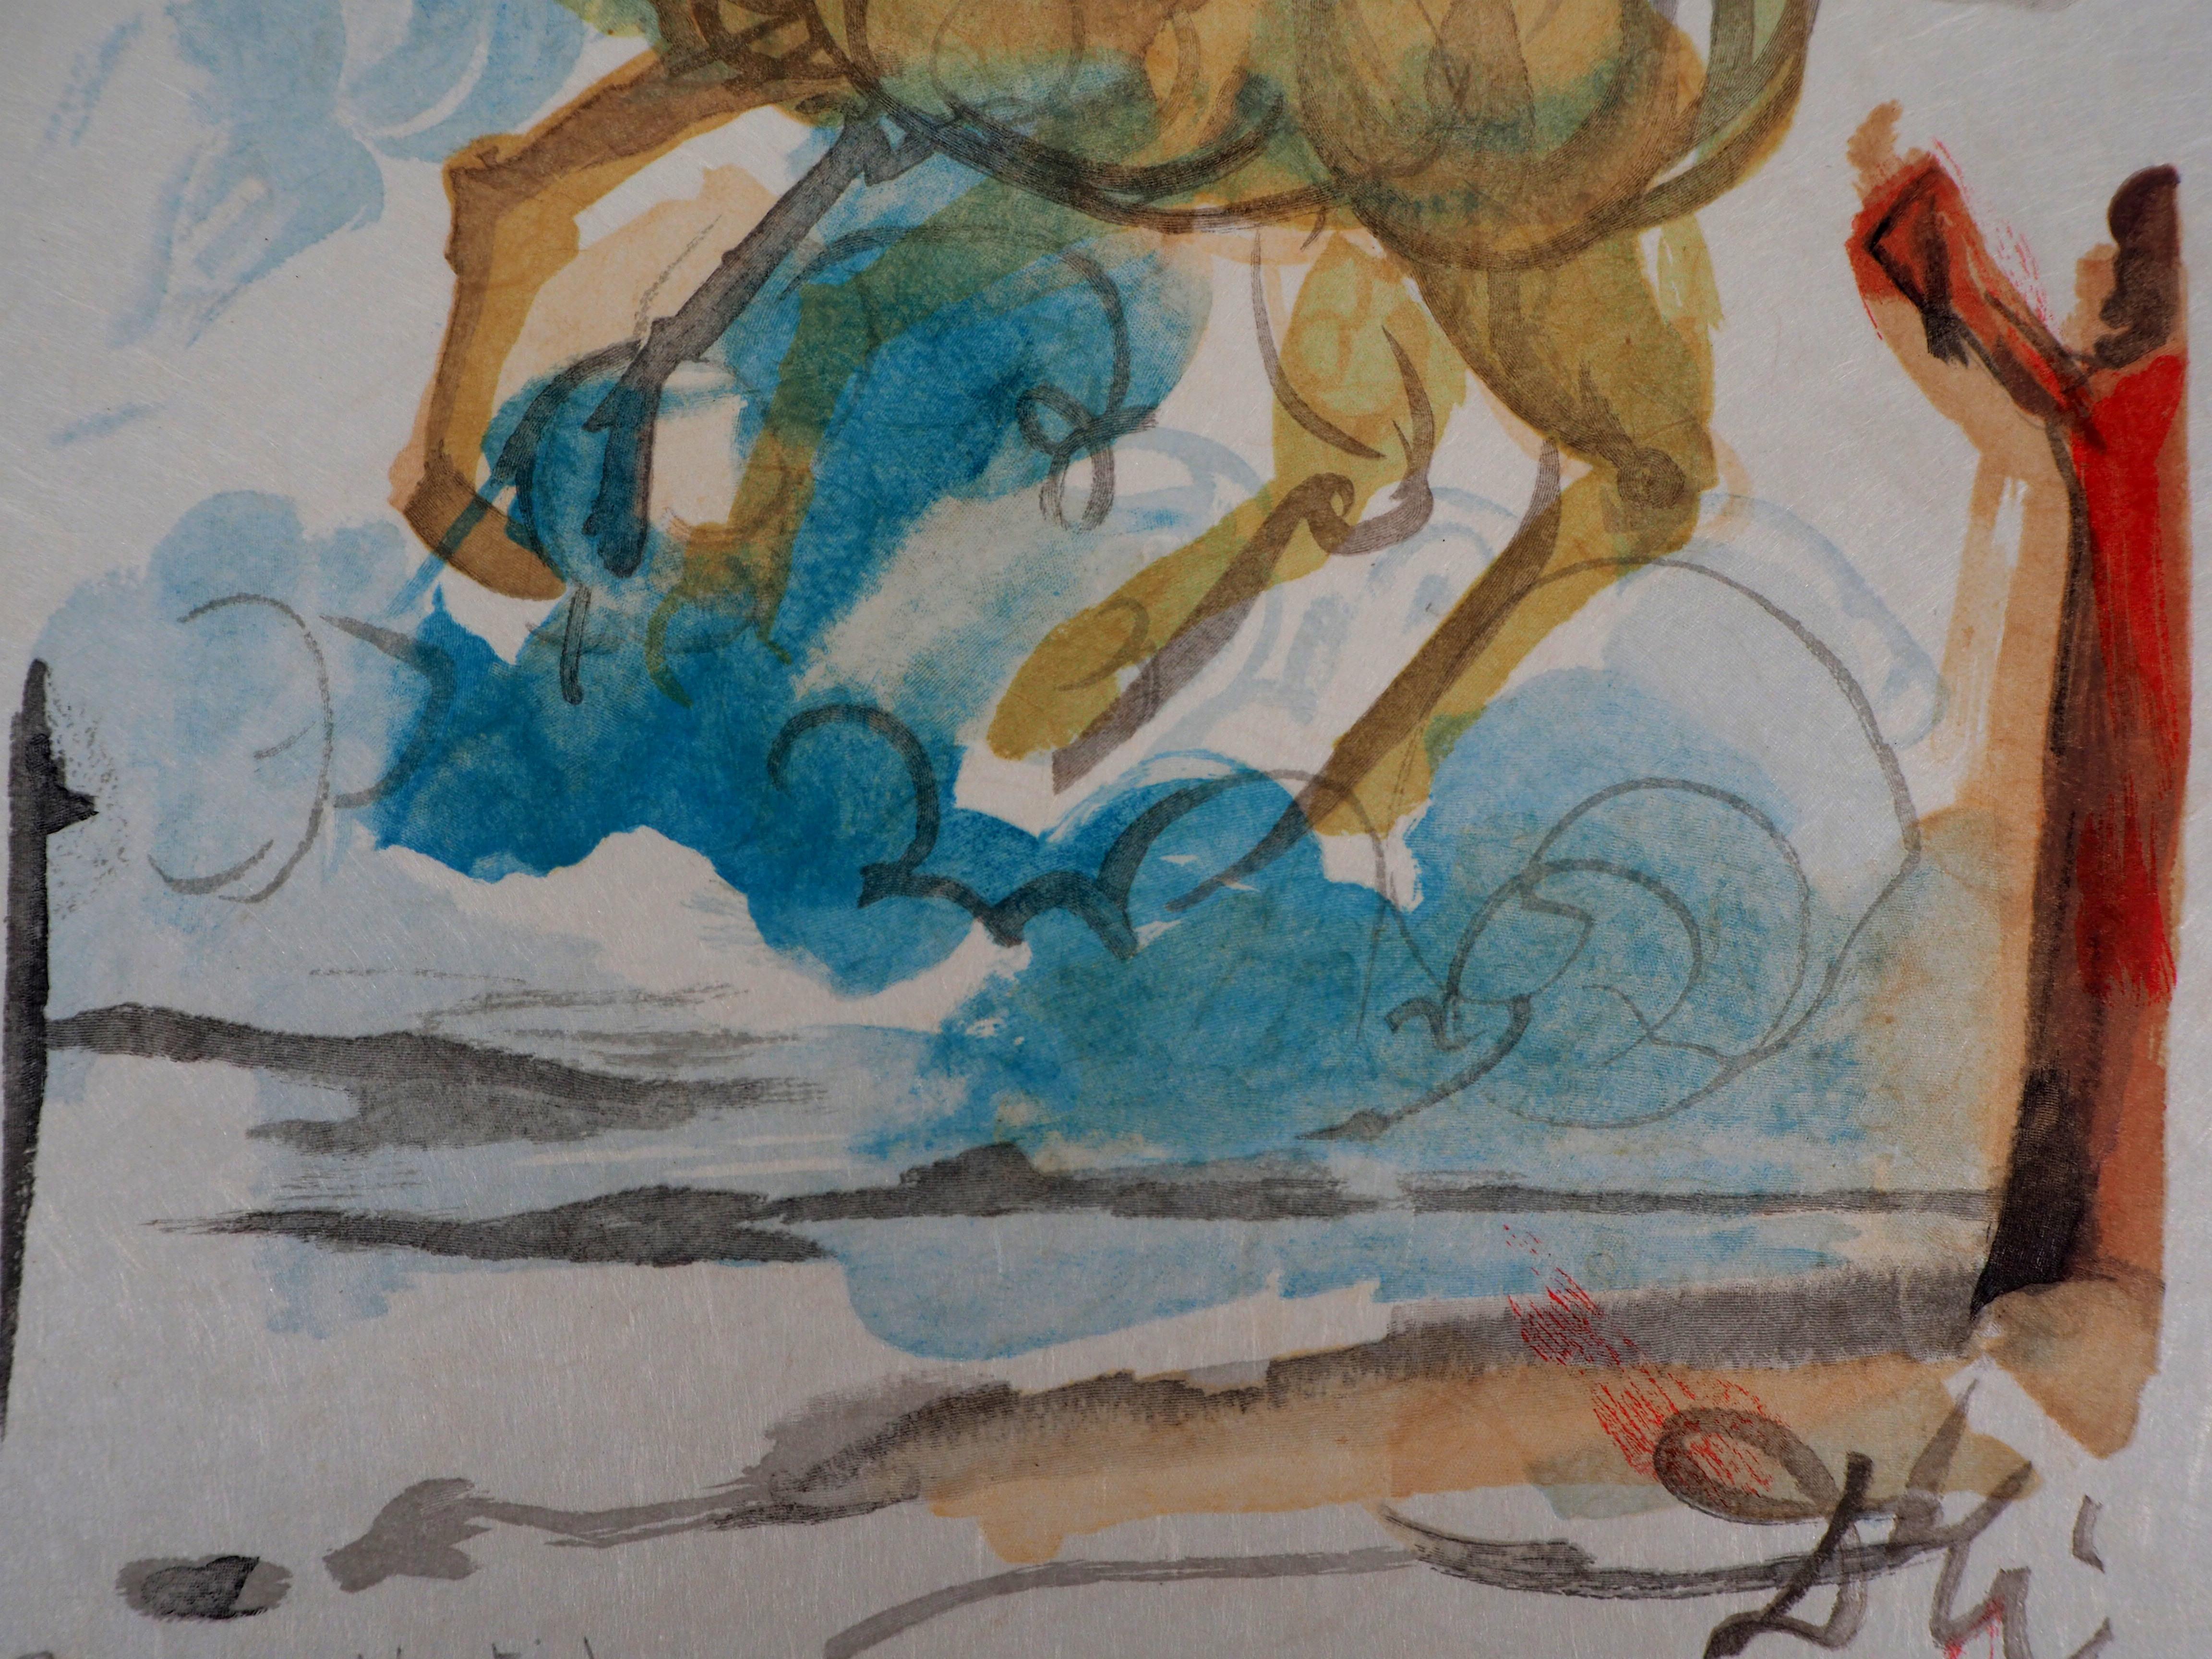  Pegasus (Generous Steed) - Original Woodcut, Handsigned (Field #79-2 J) - Gray Figurative Print by Salvador Dalí